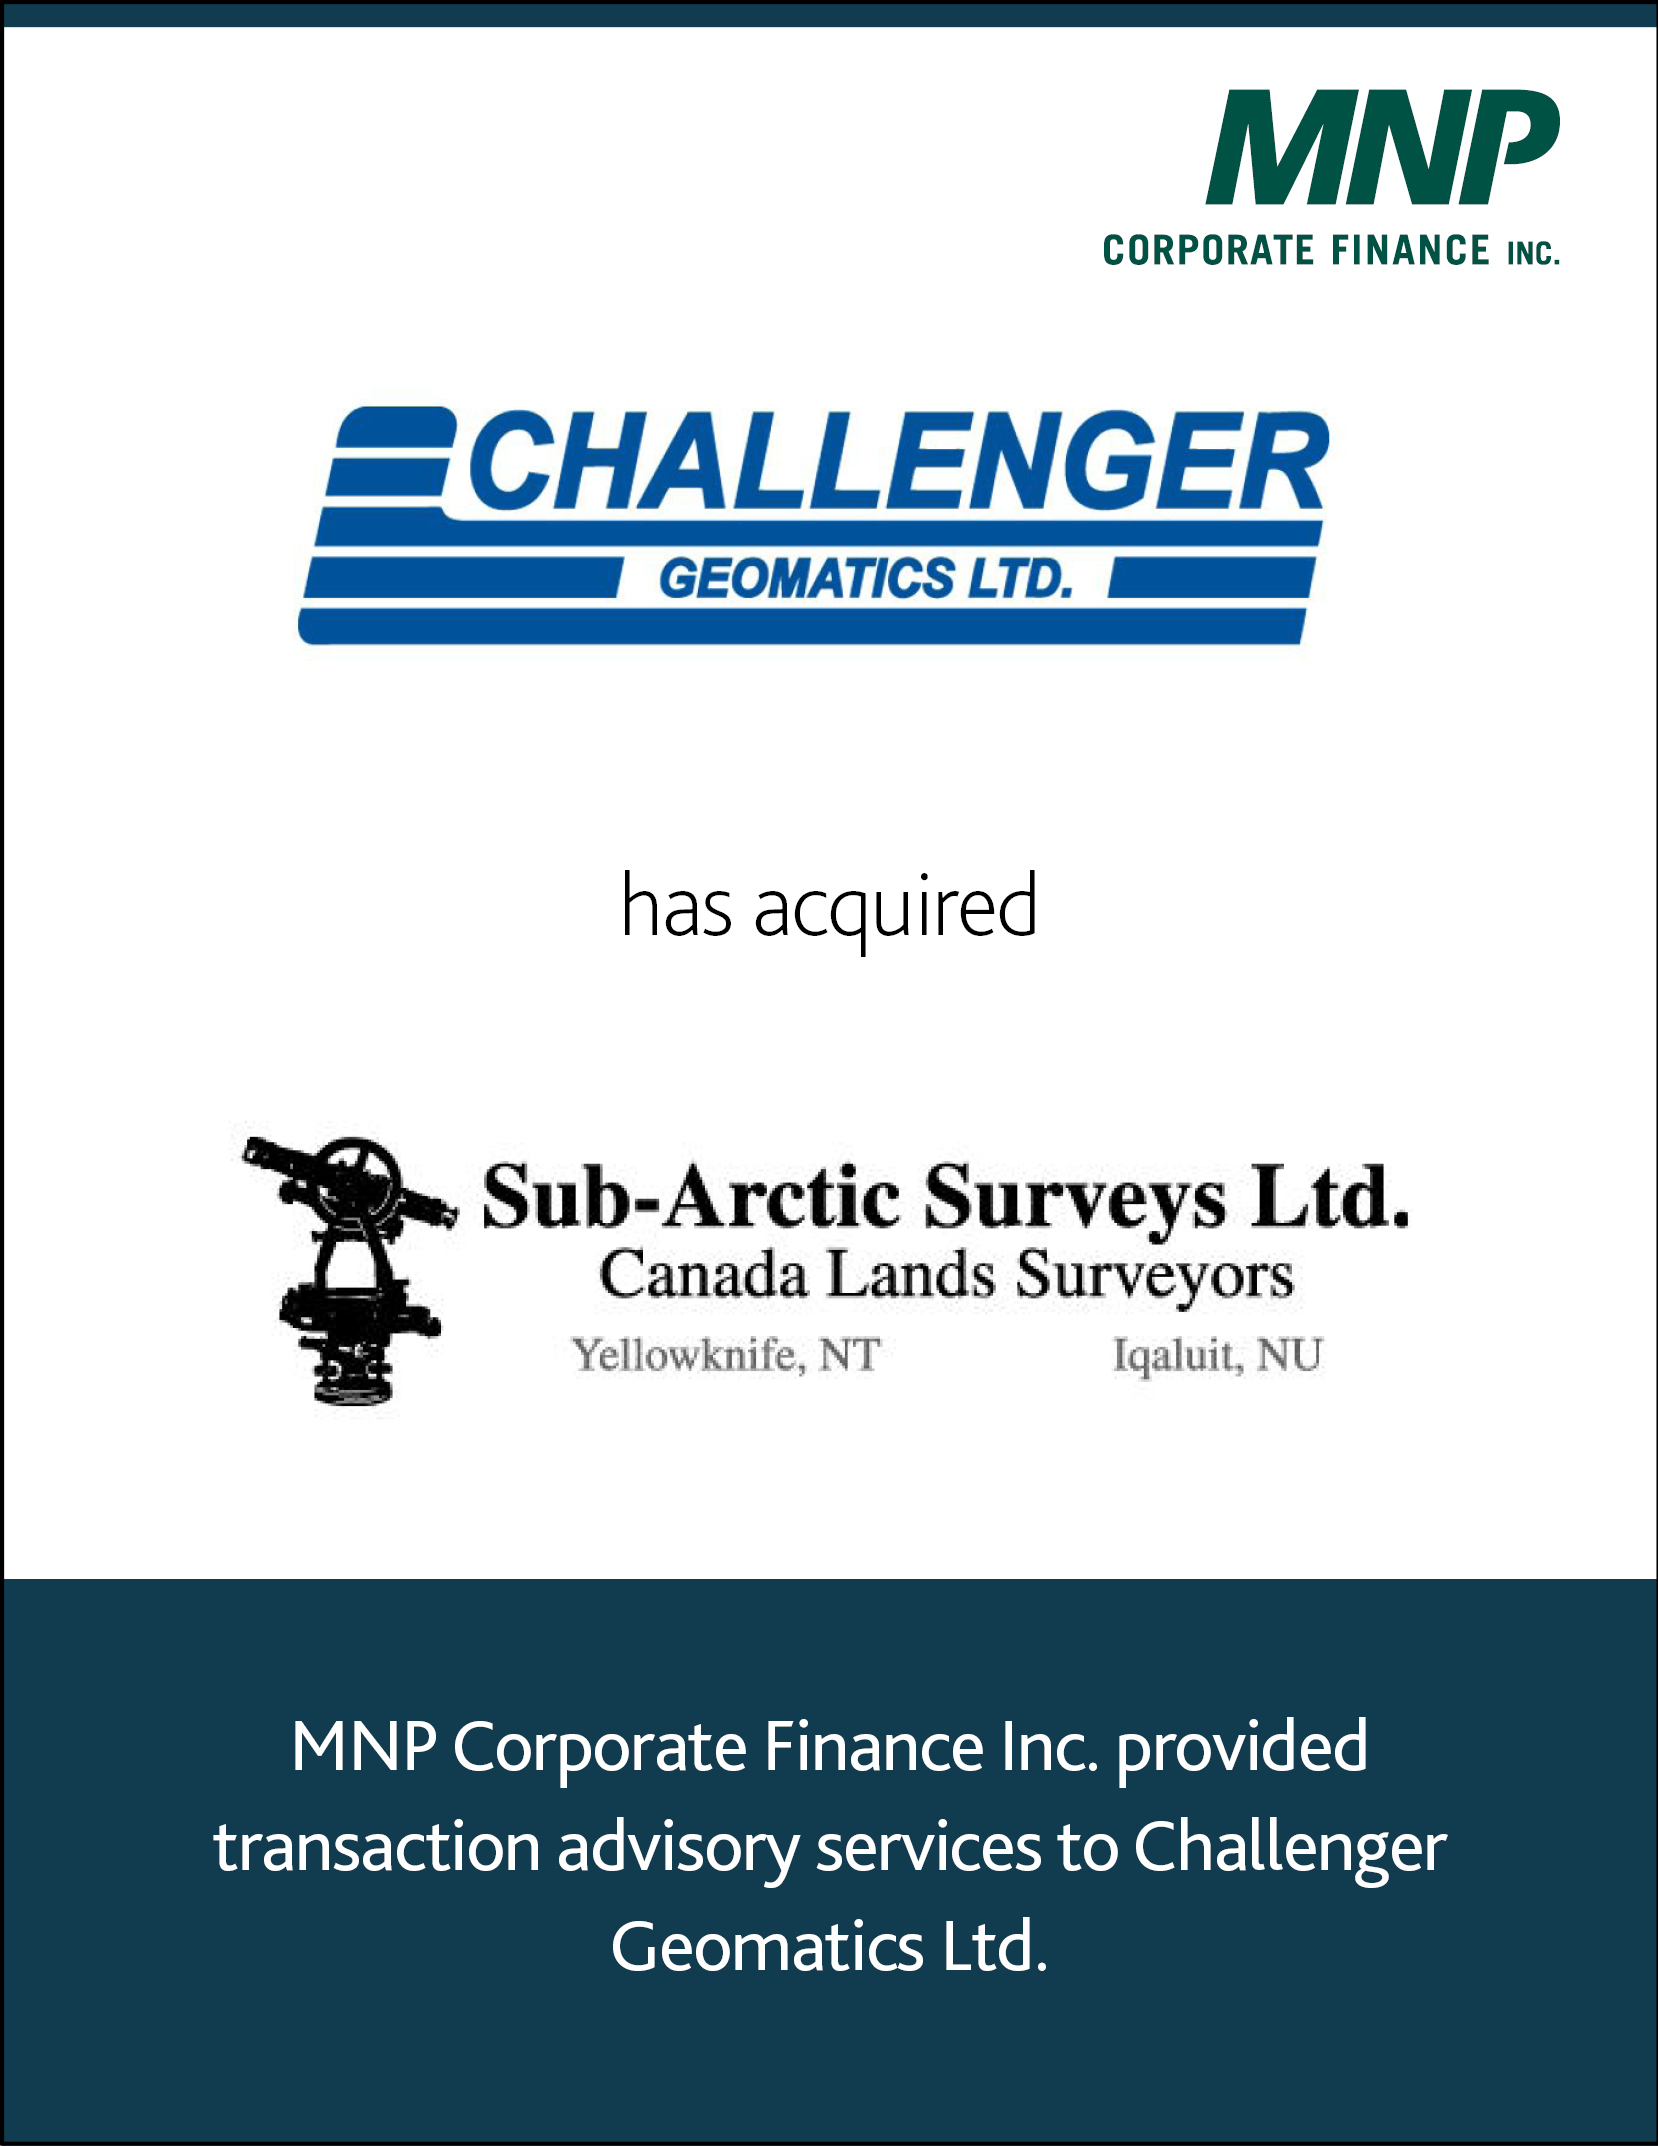 Challenger Geomatics Ltd. has acquired Sub-Arctic Surveys Ltd.